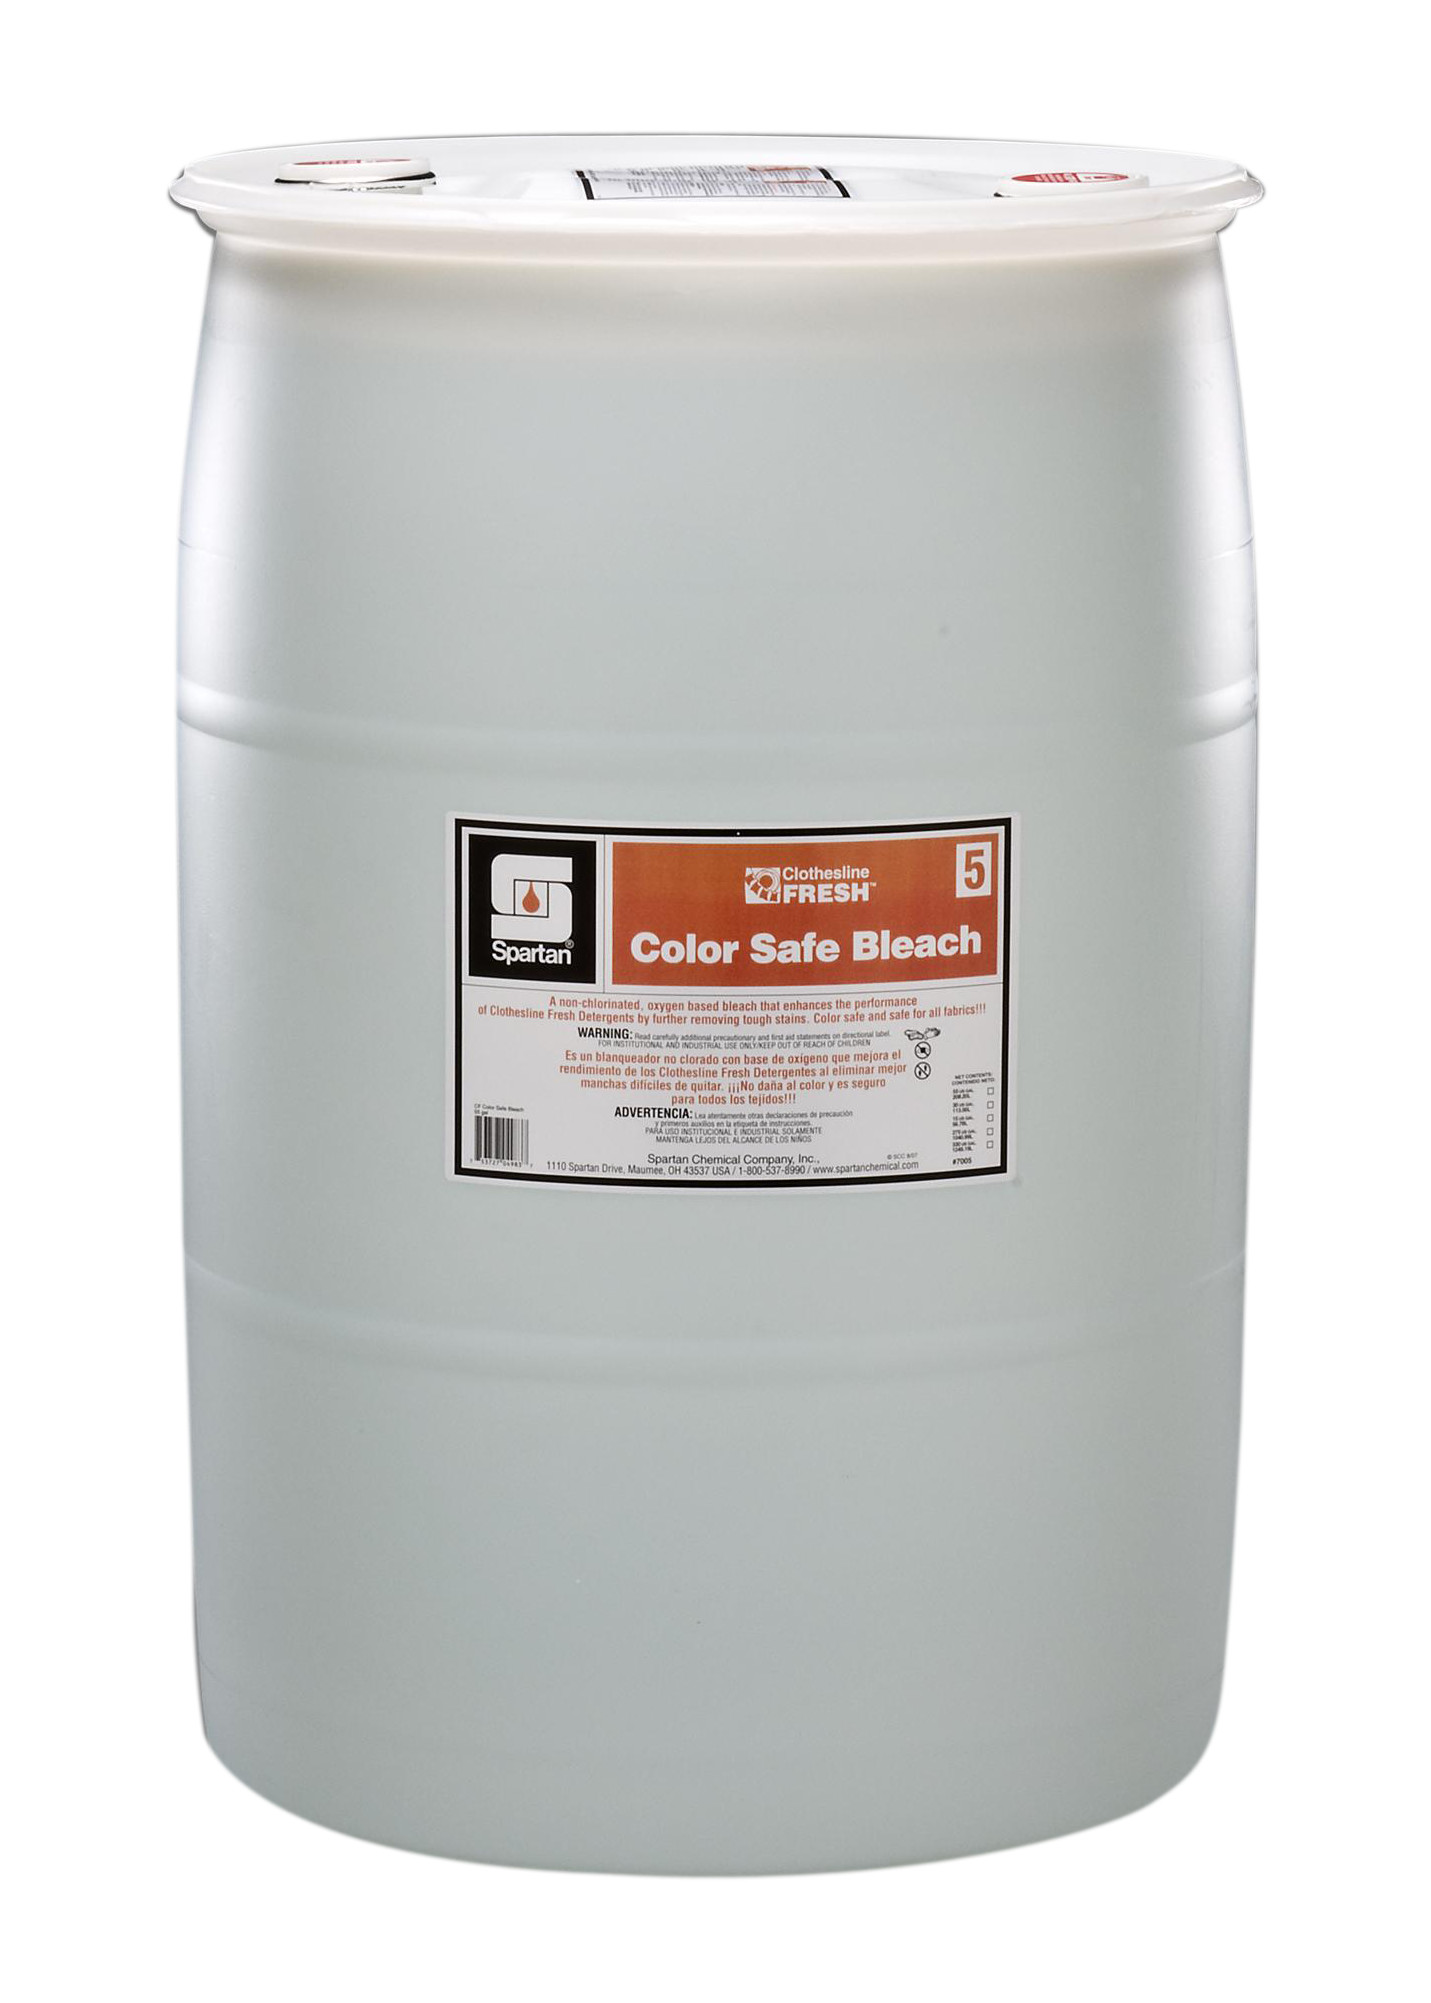 Spartan Chemical Company Clothesline Fresh Color Safe Bleach 5, 55 GAL DRUM